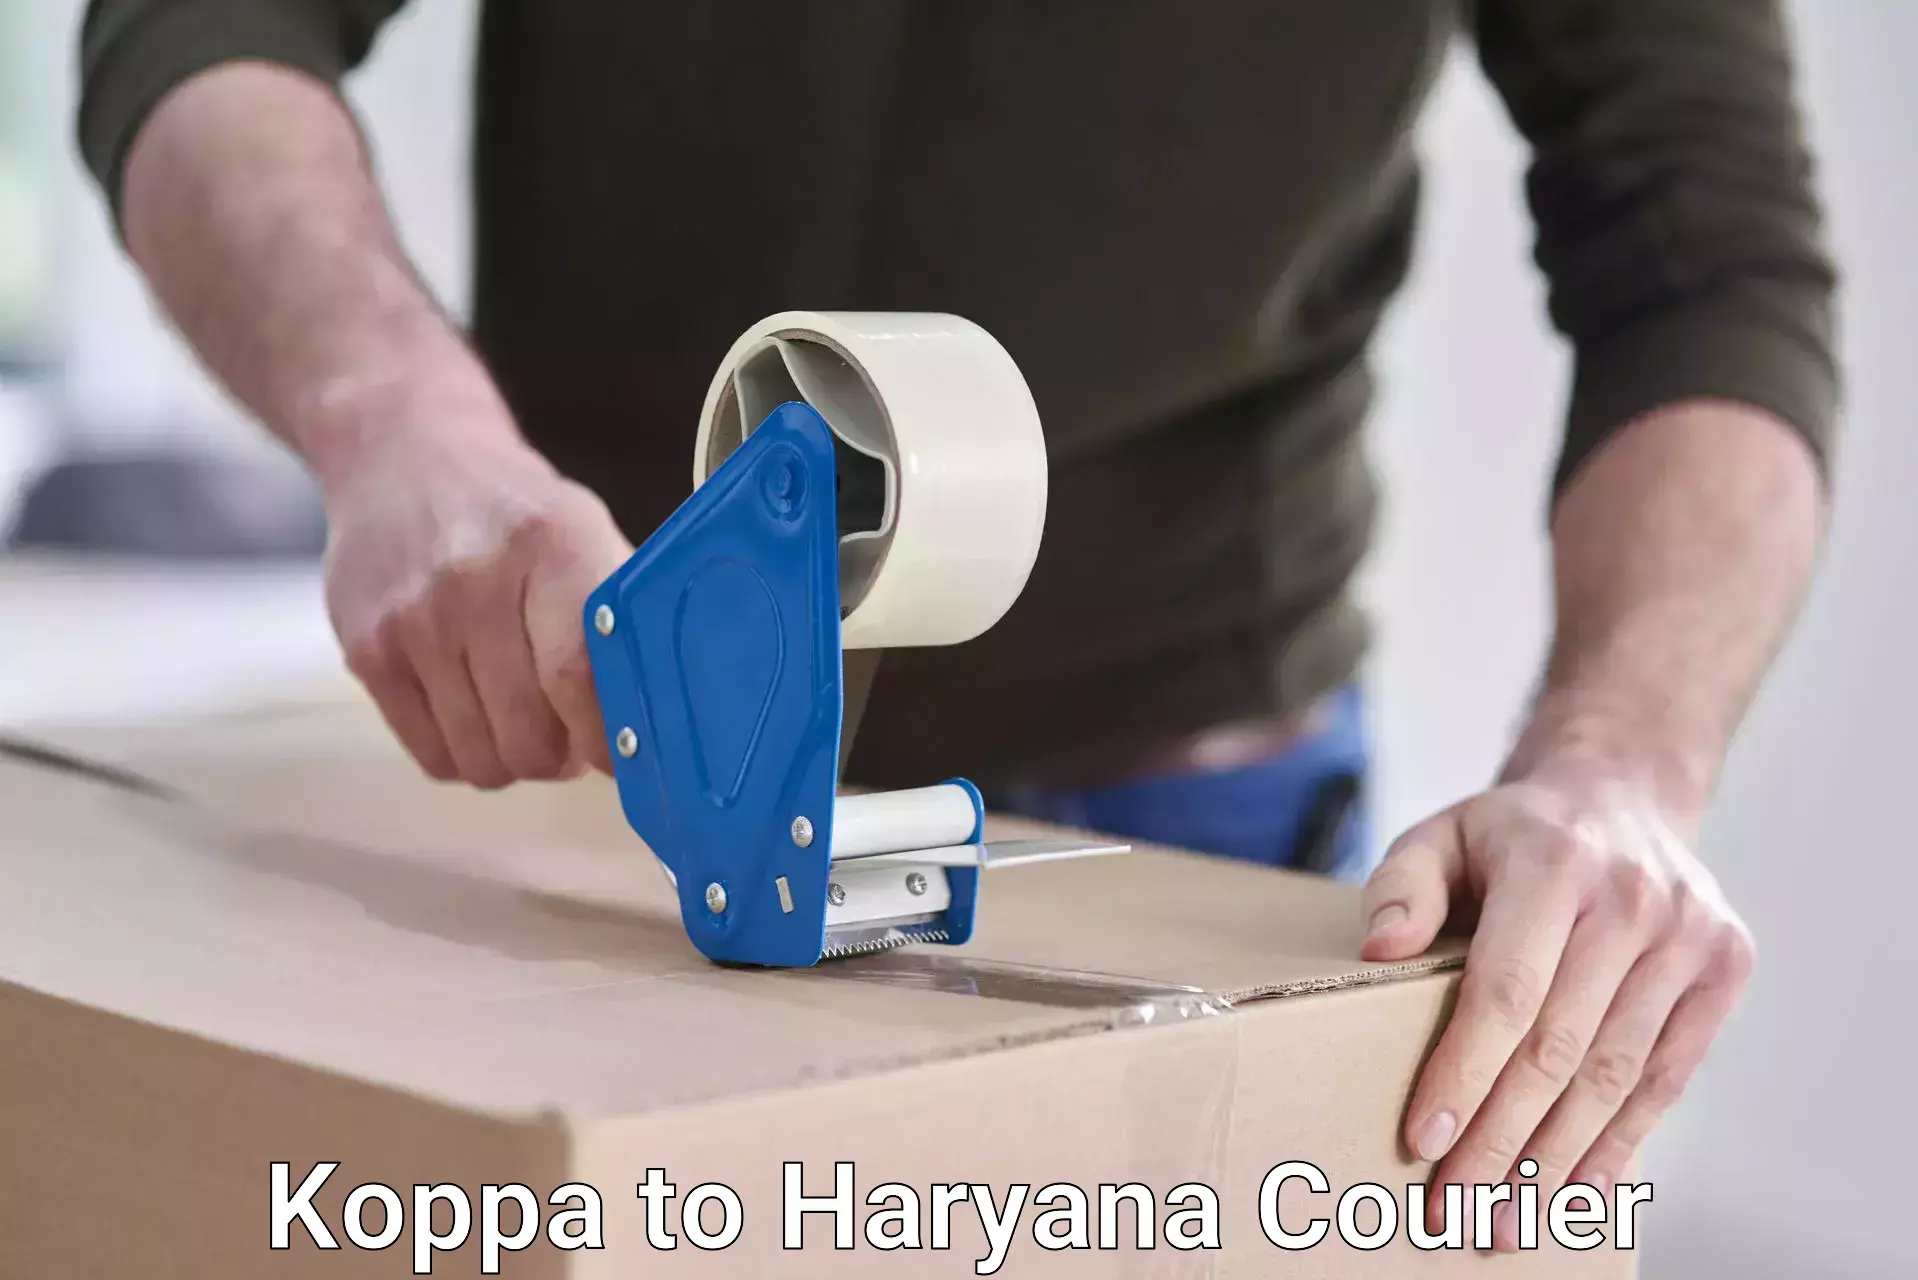 Courier membership in Koppa to Haryana